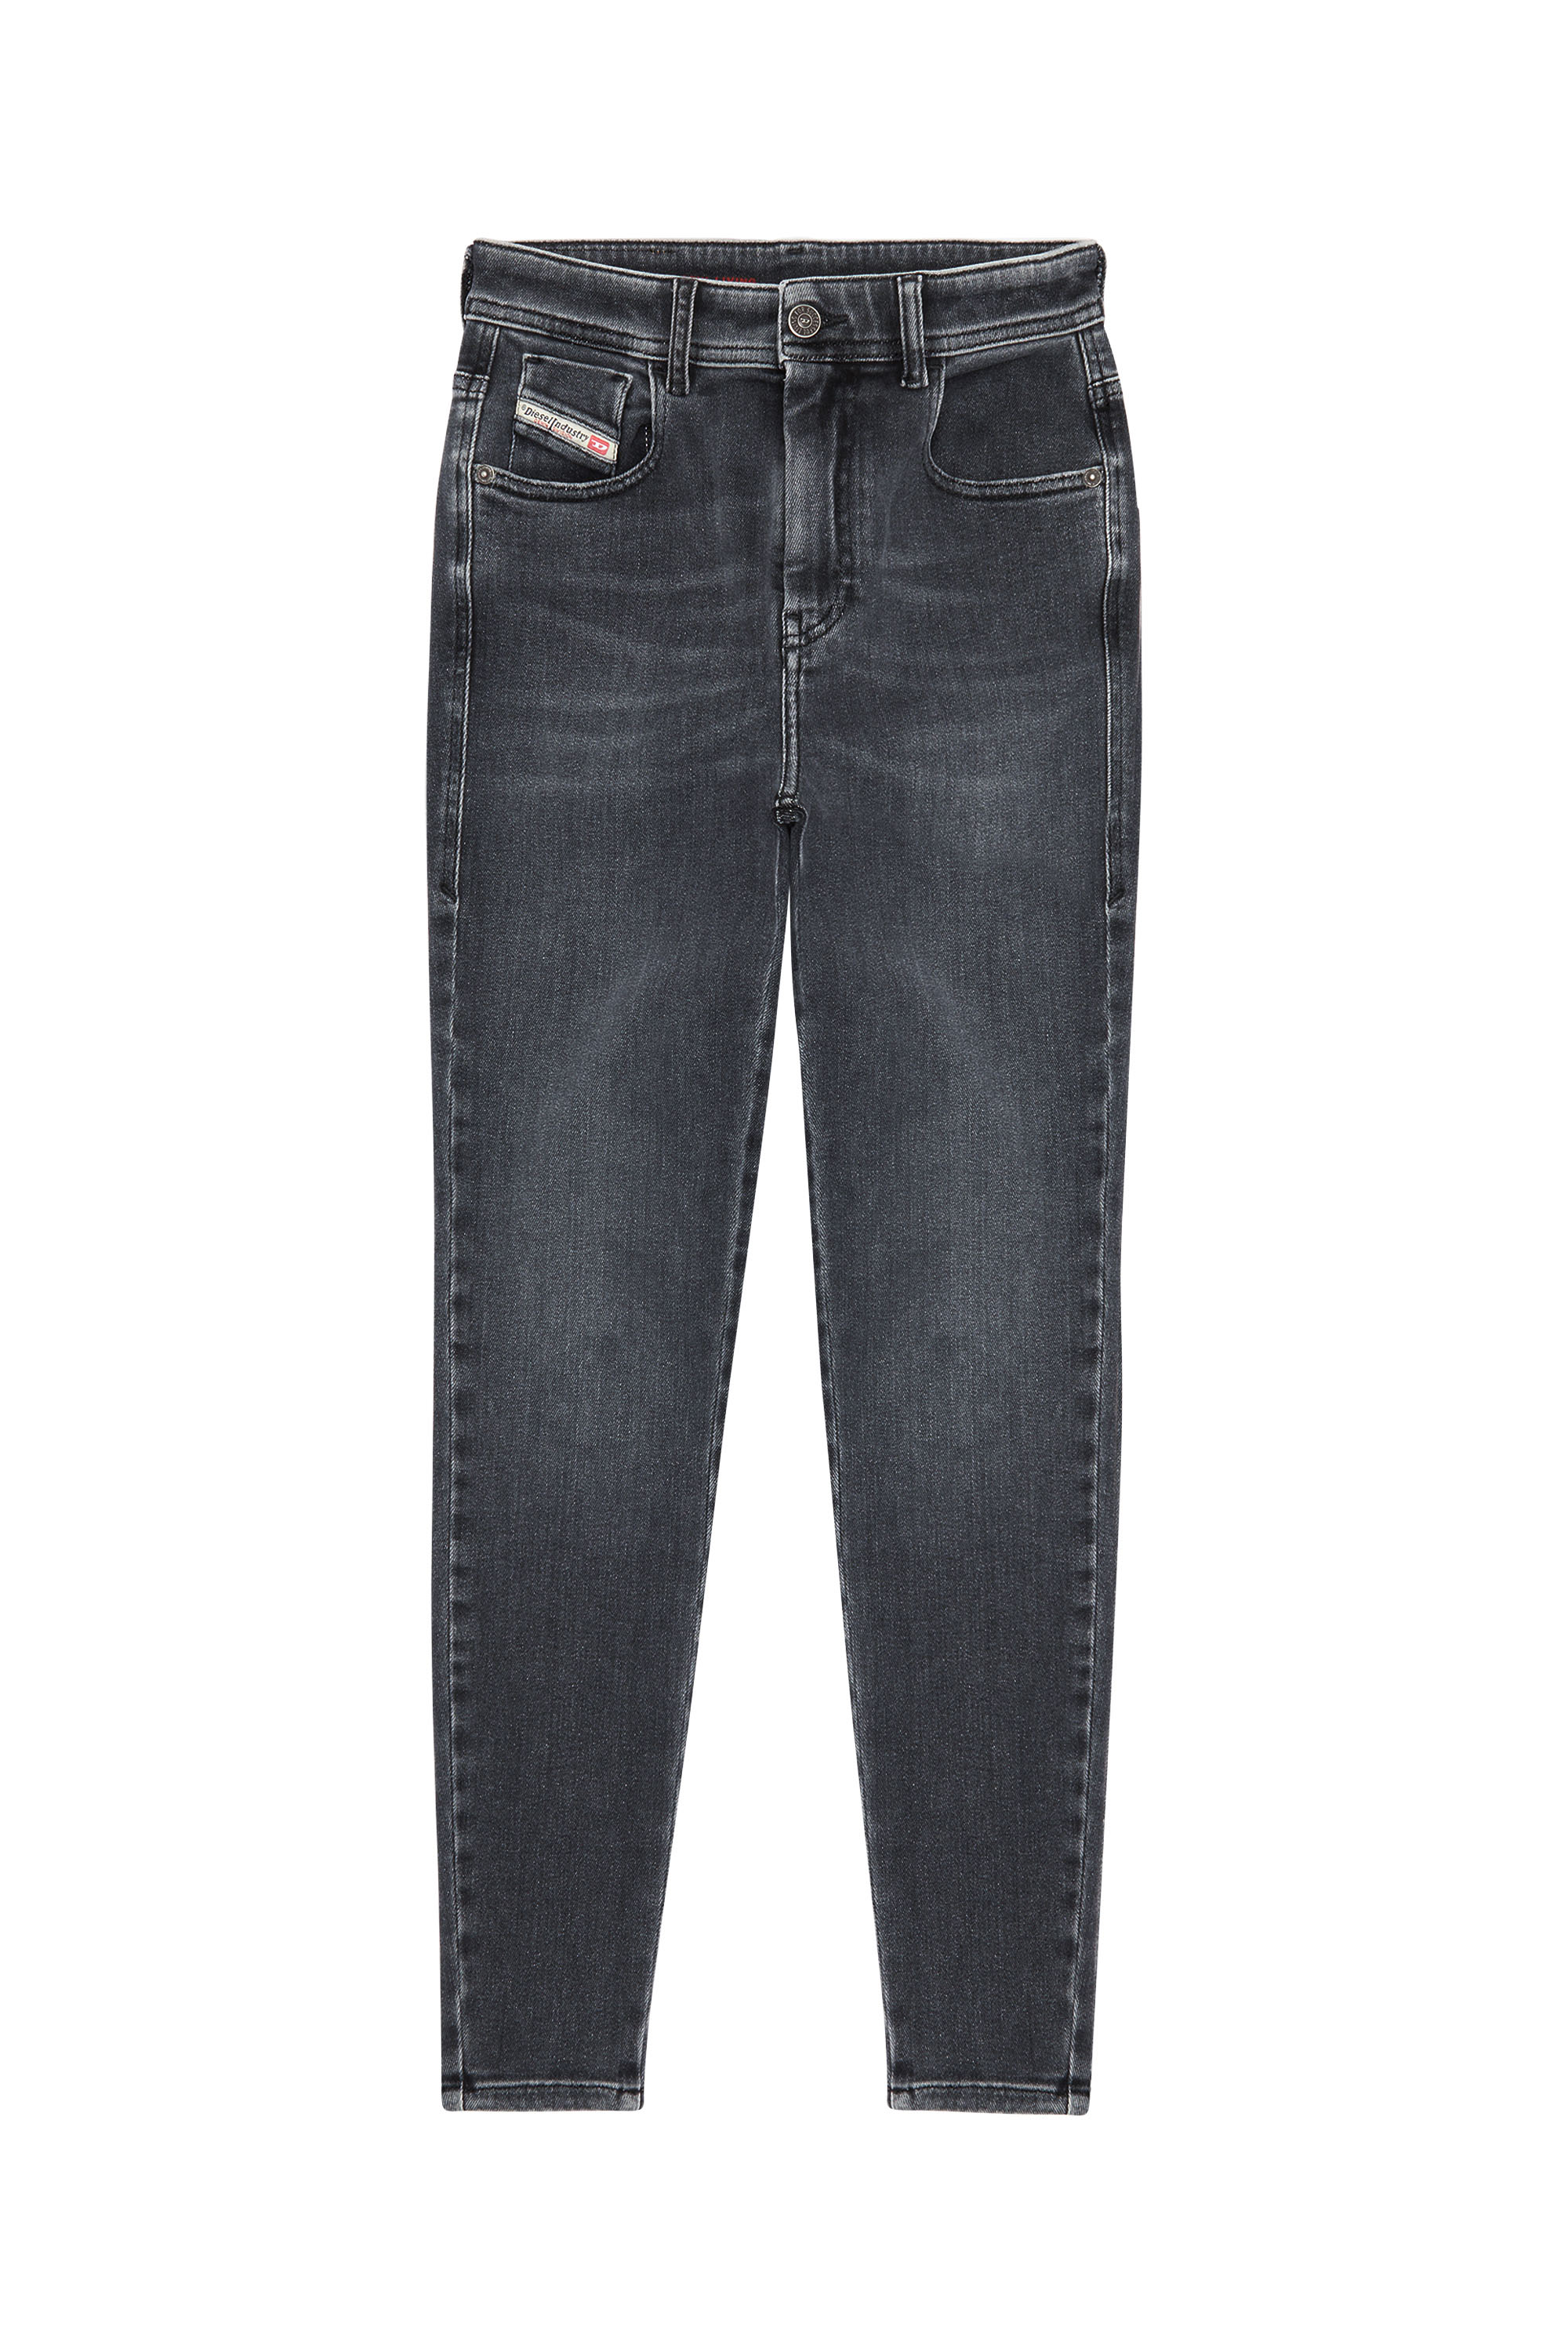 1984 SLANDY-HIGH 09D61 Super skinny Jeans, Black/Dark grey - Jeans